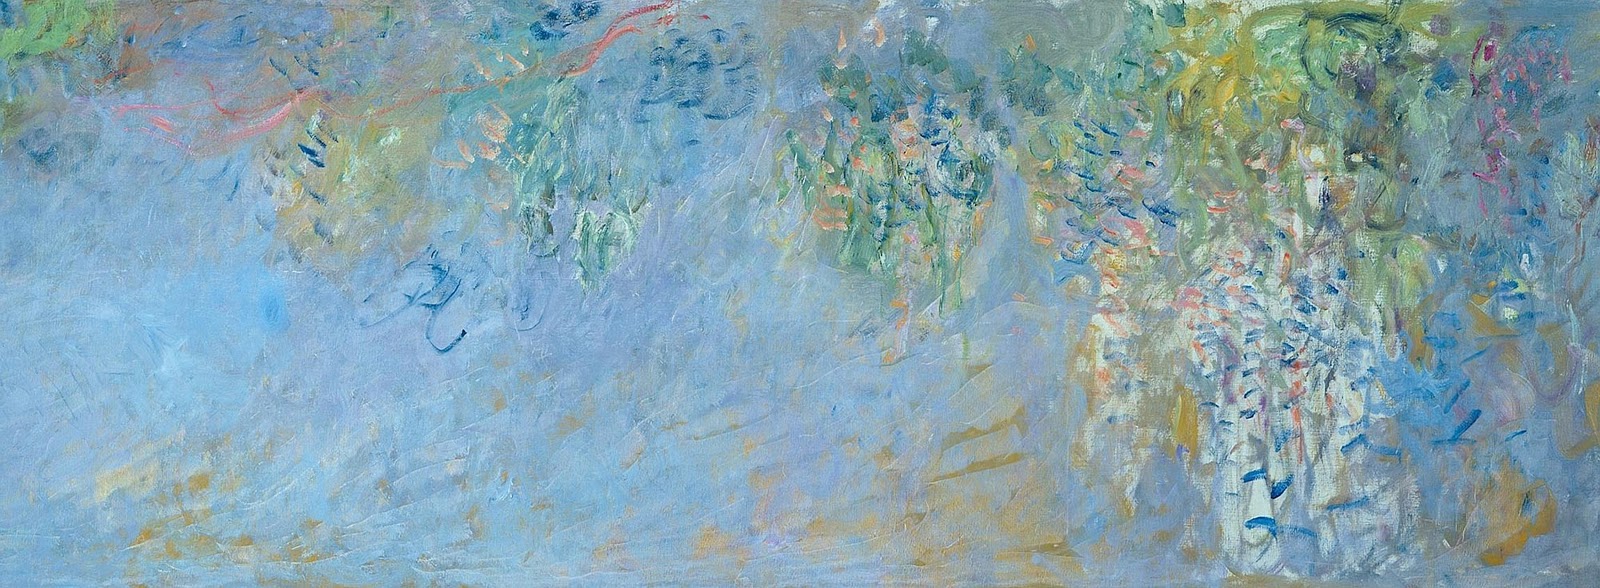 Claude+Monet-1840-1926 (226).jpg